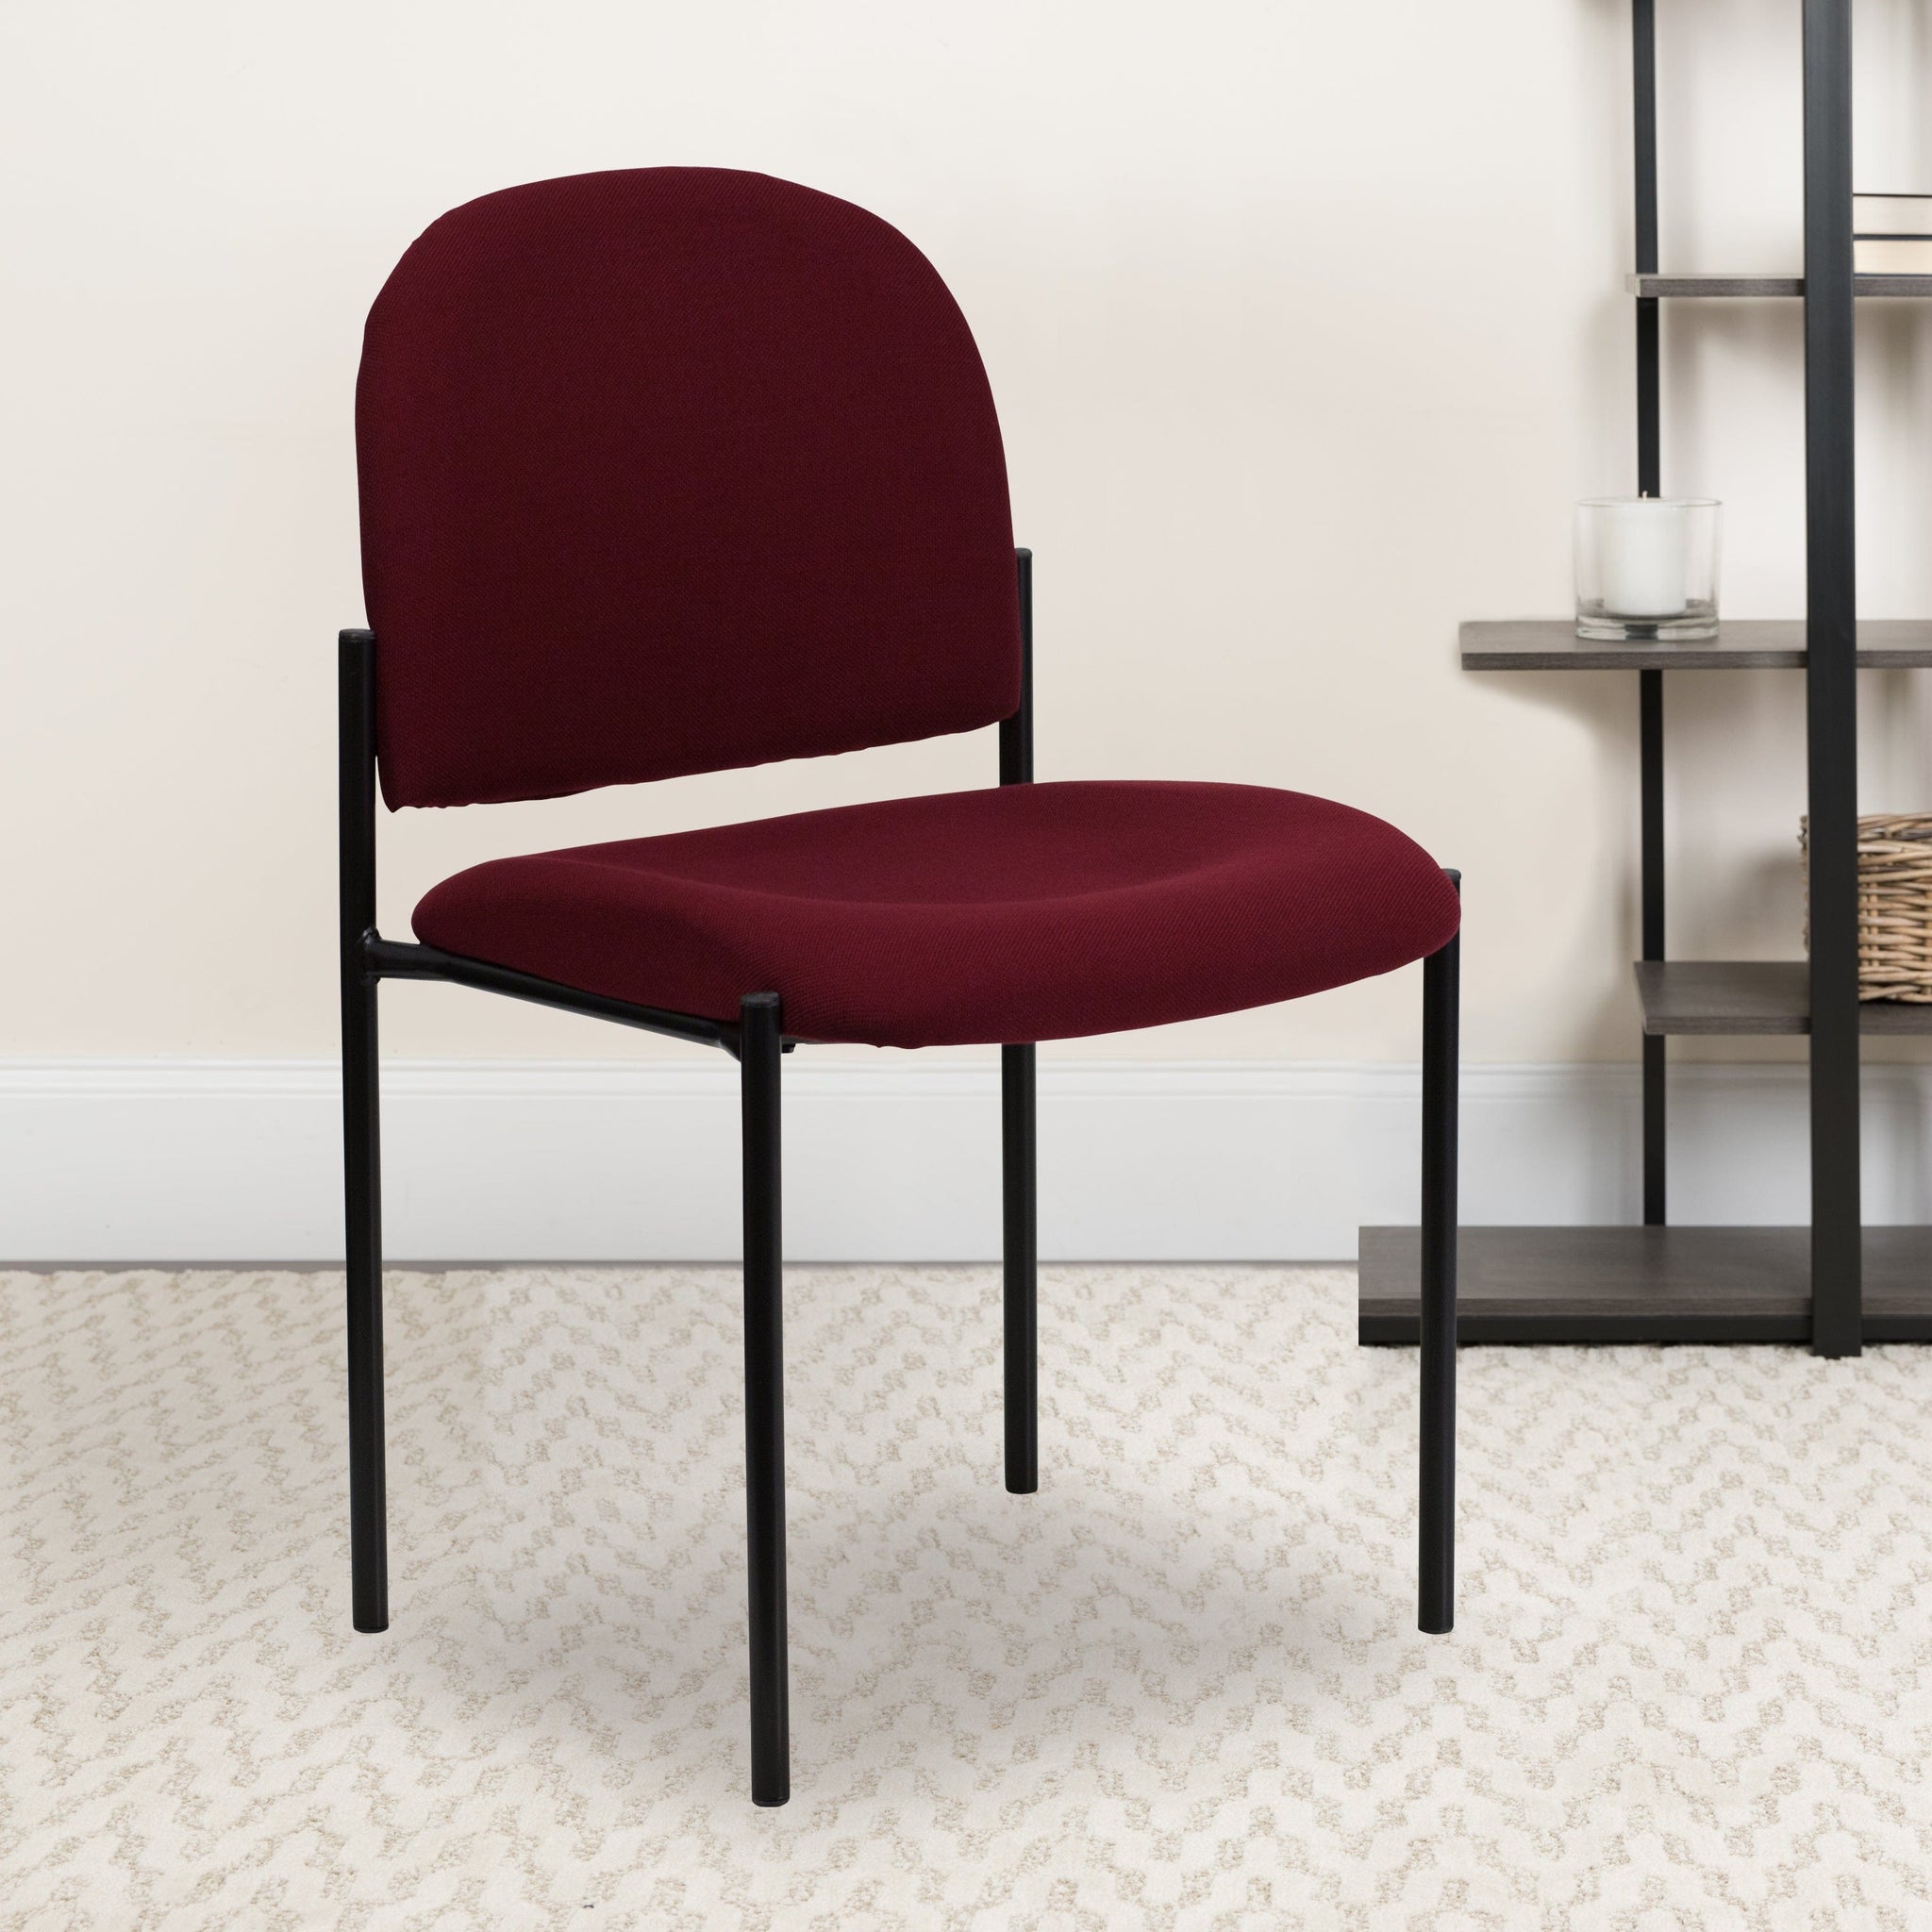 Comfort Black Fabric Stackable Steel Side Reception Chair - BT-515-1-BK-GG